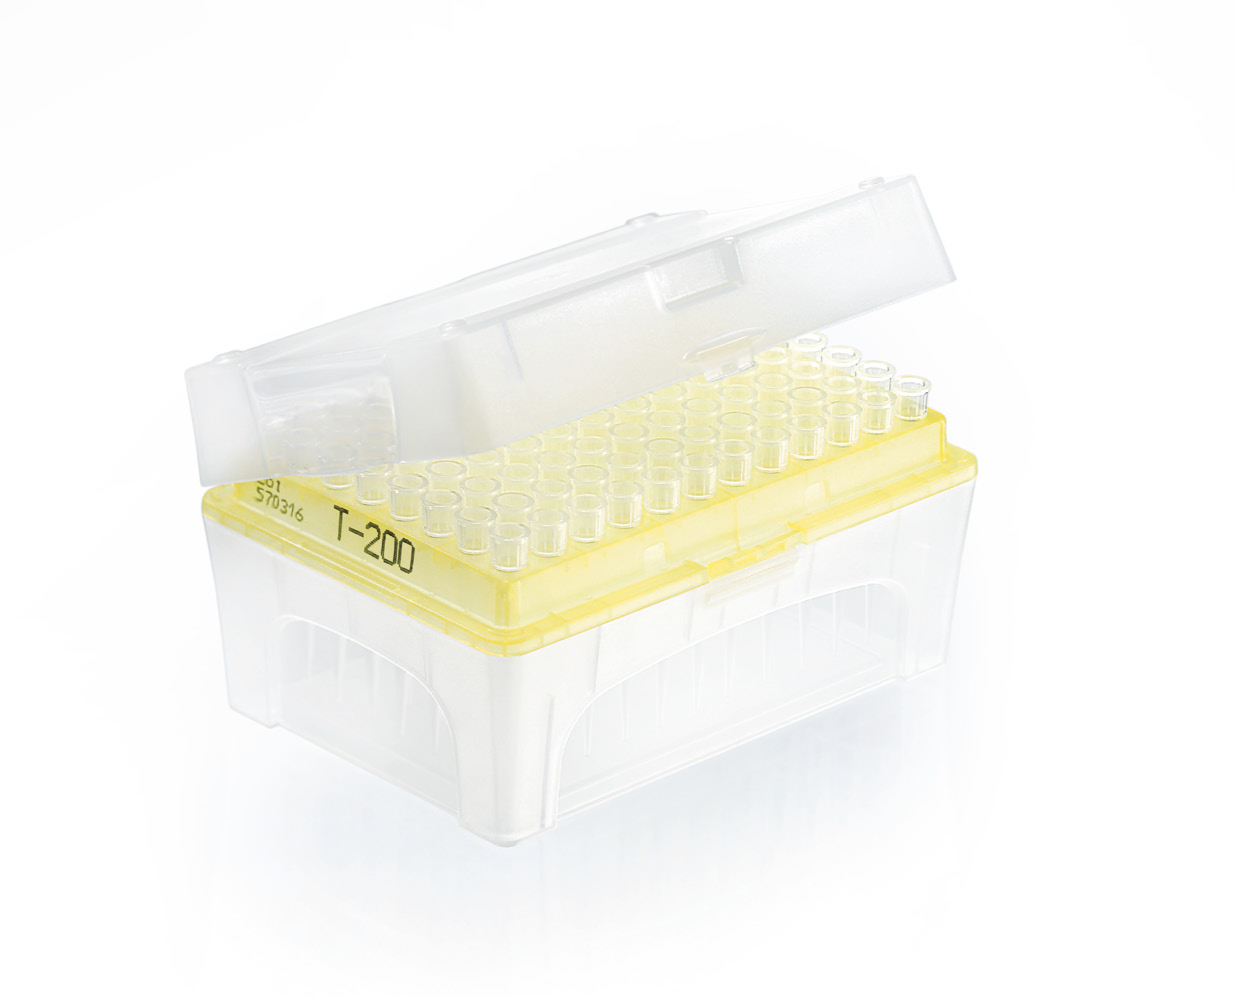 Filter tips rack DNA-/RNase-free IVD TipBox 1,0 - 20 μl, PCK=480